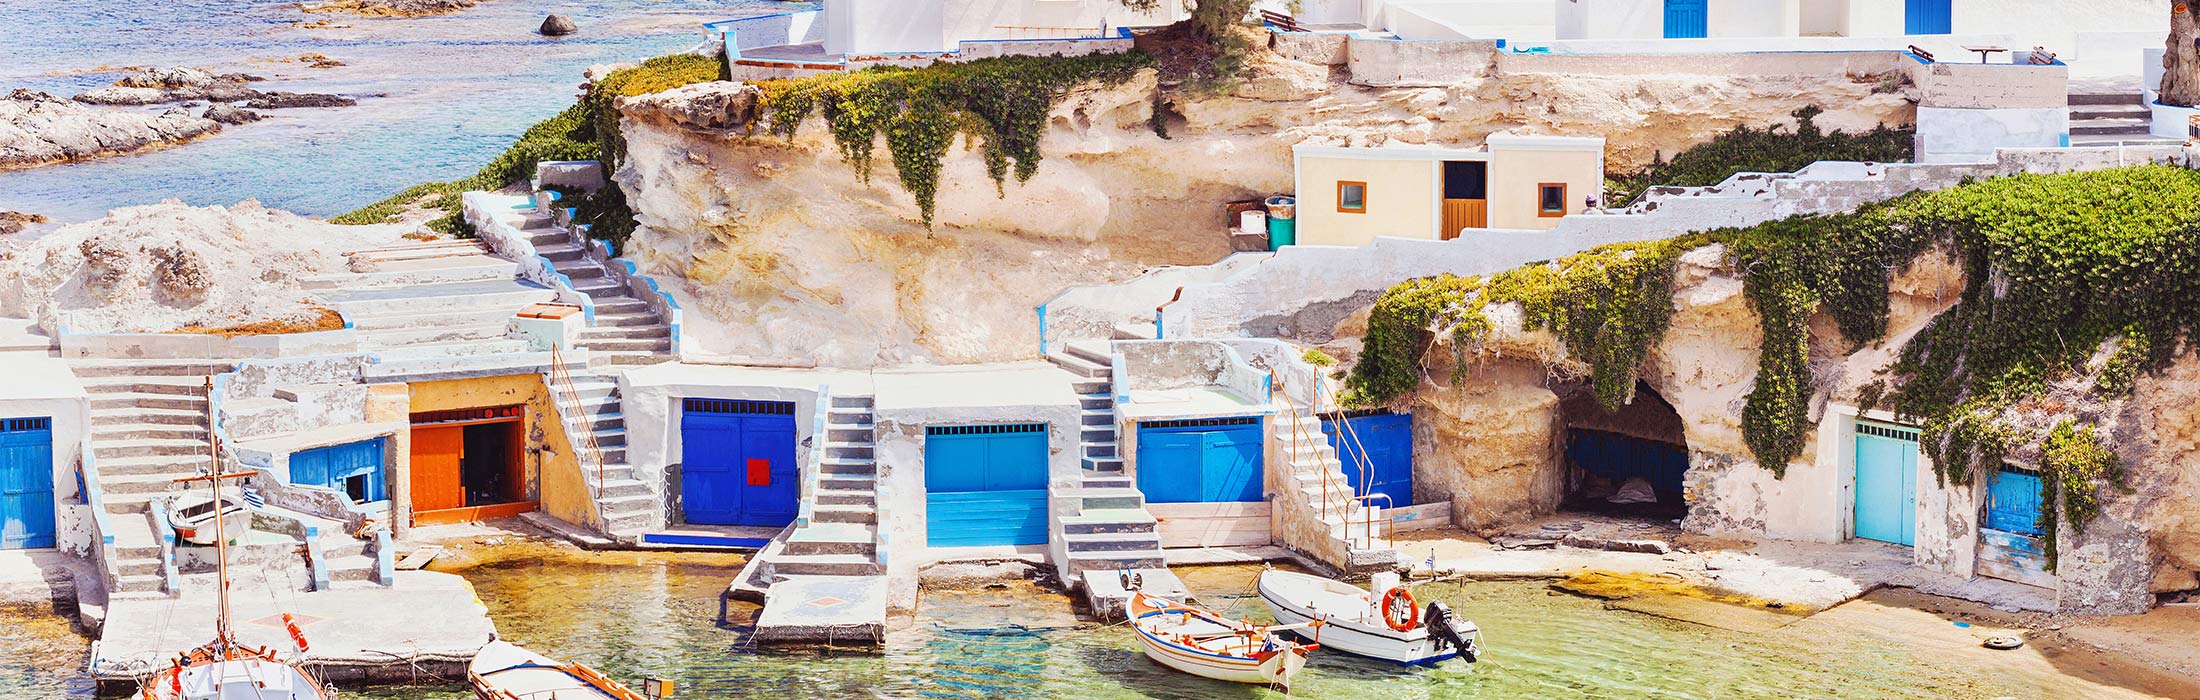 top yacht charter destinations mediterranean greece cyclades milos main slider 2